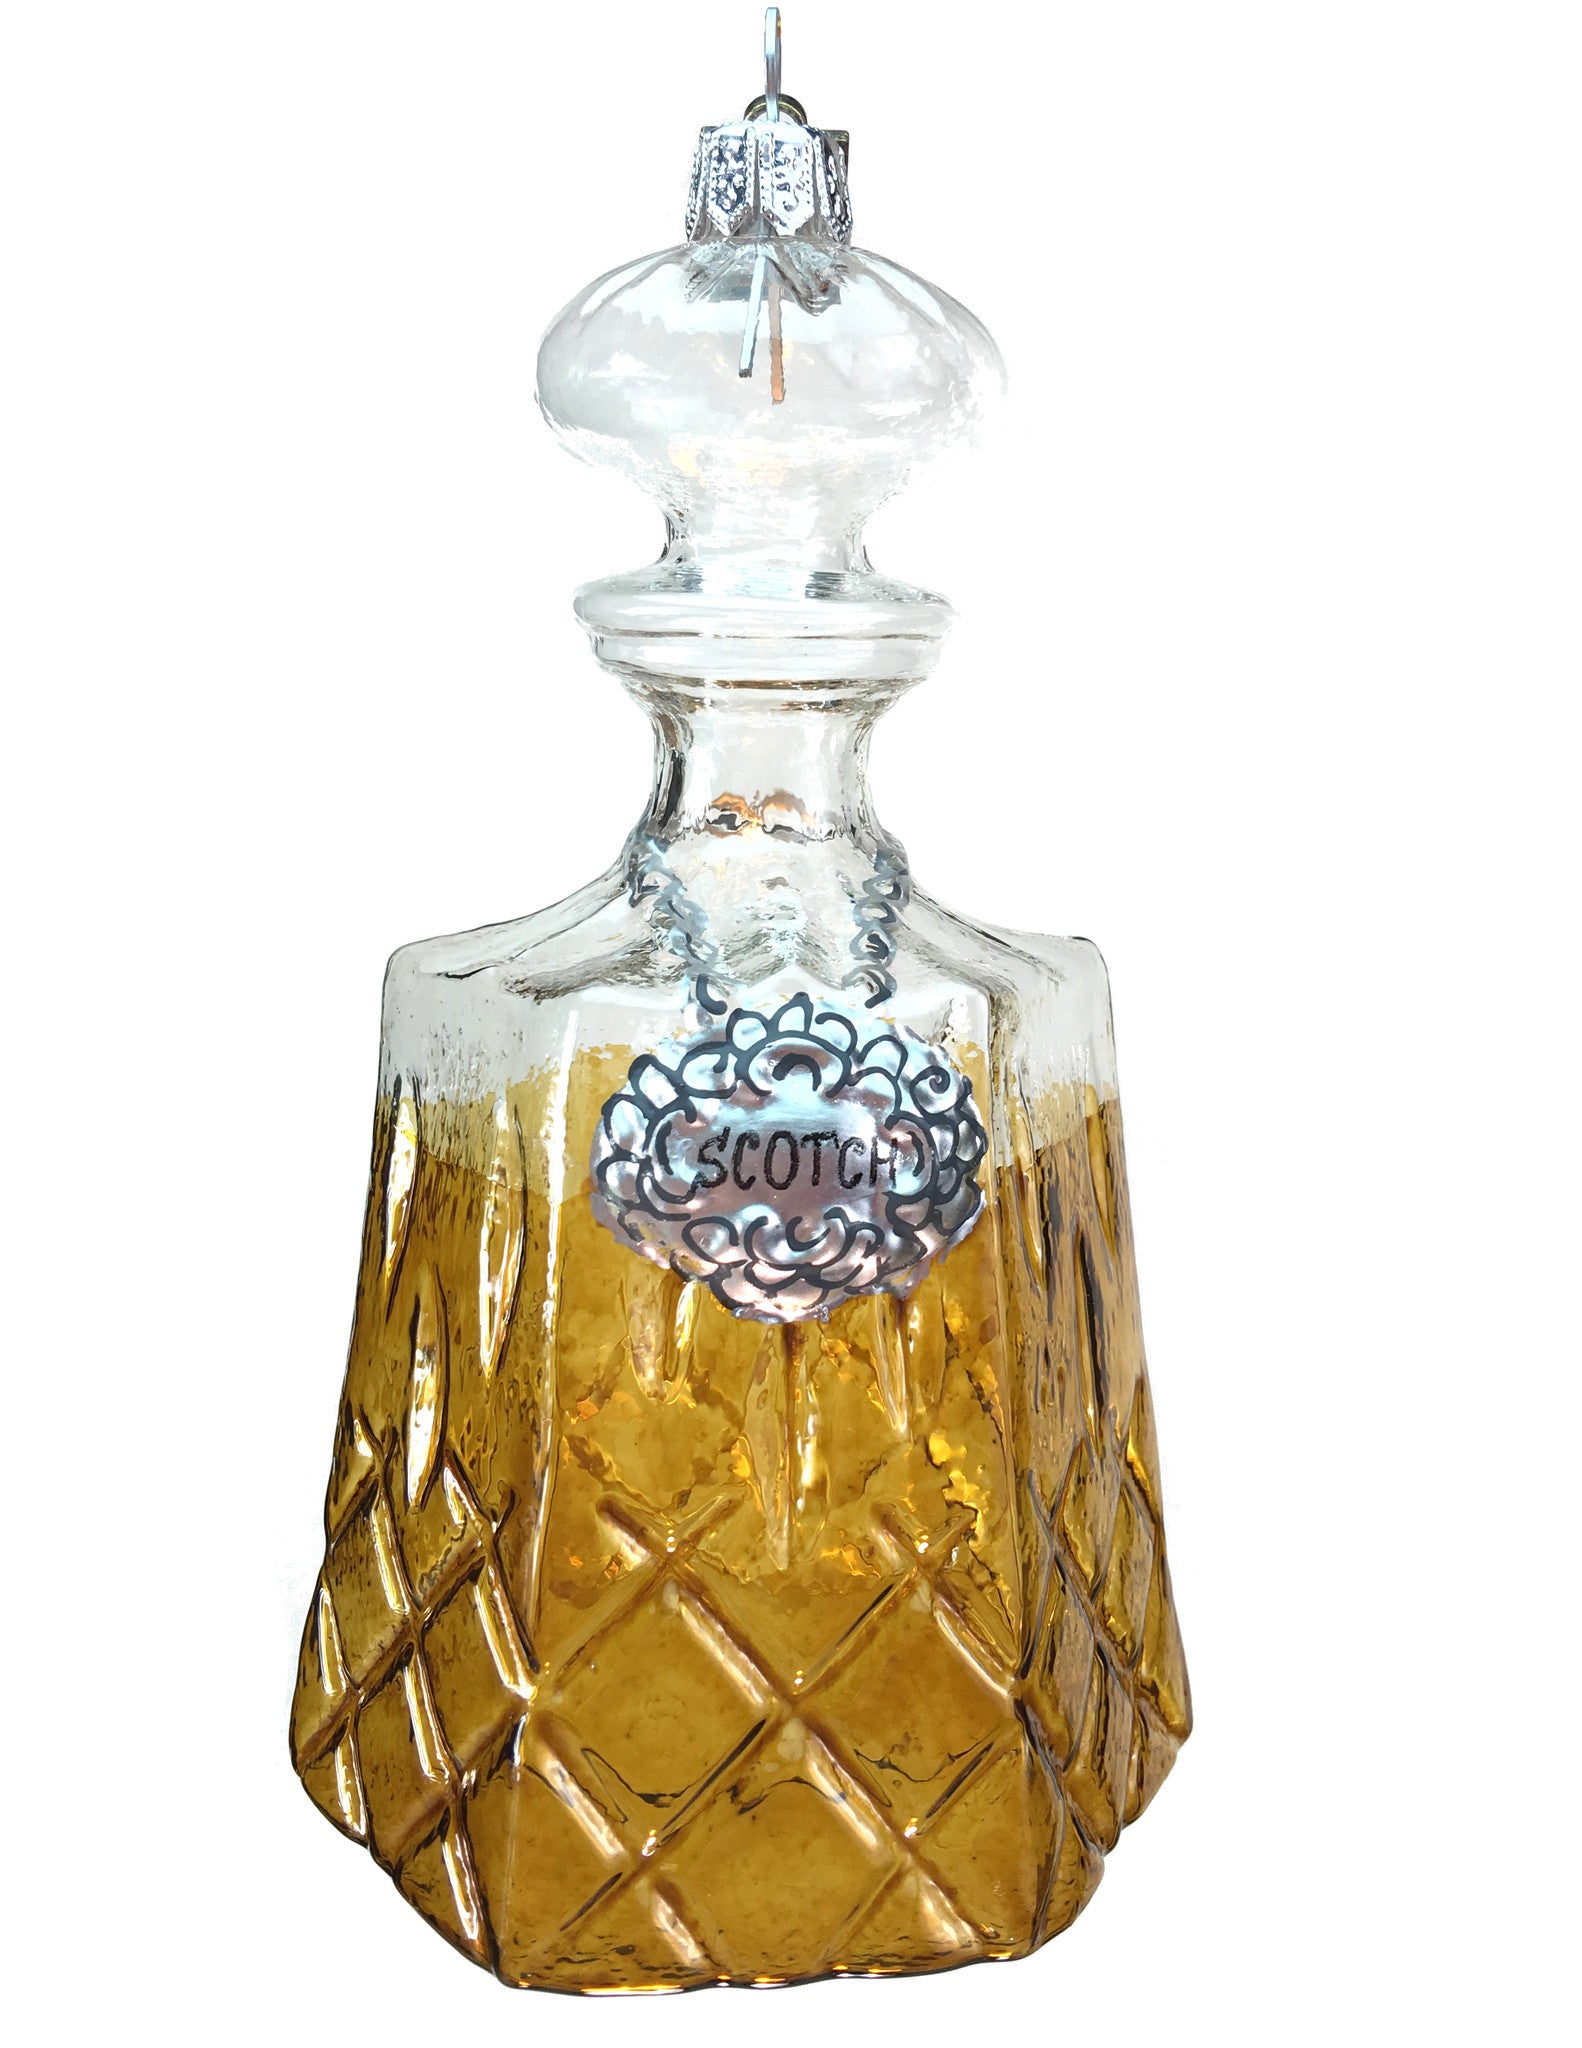 Glass Scotch Decanter Ornament by Eric Cortina.